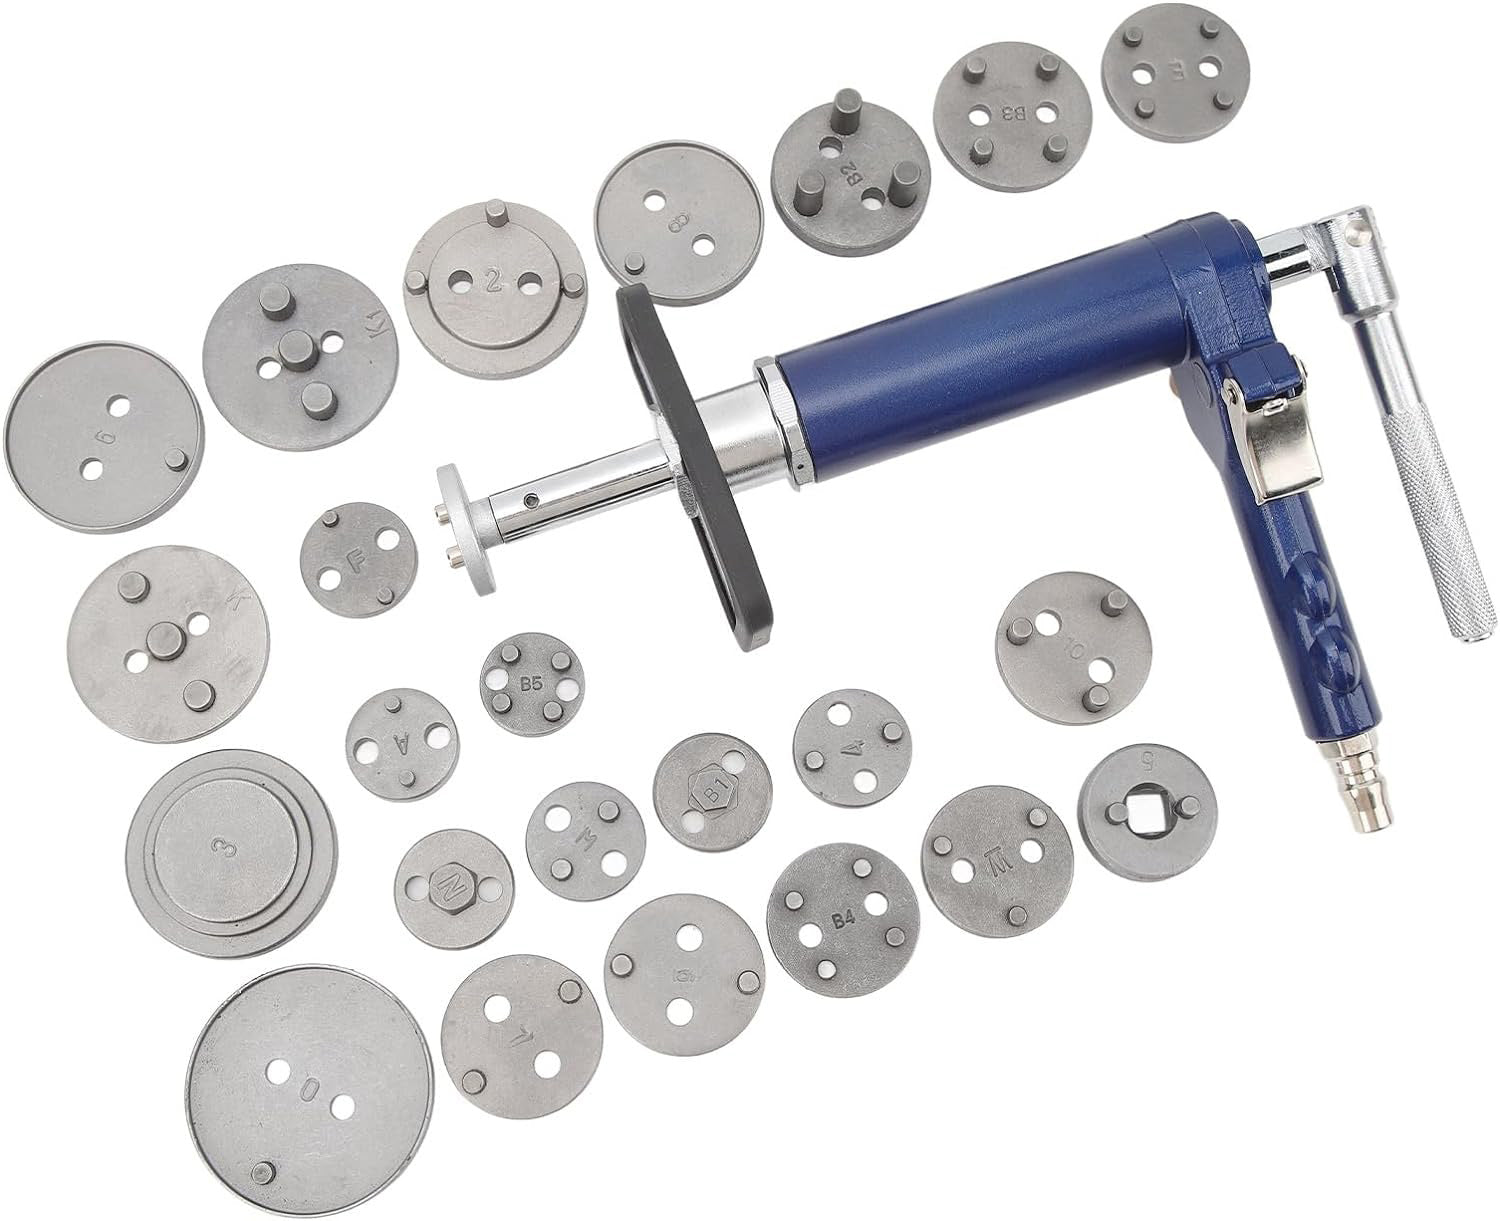 Brake Piston Compressor with 24 Piece Set's Packing List